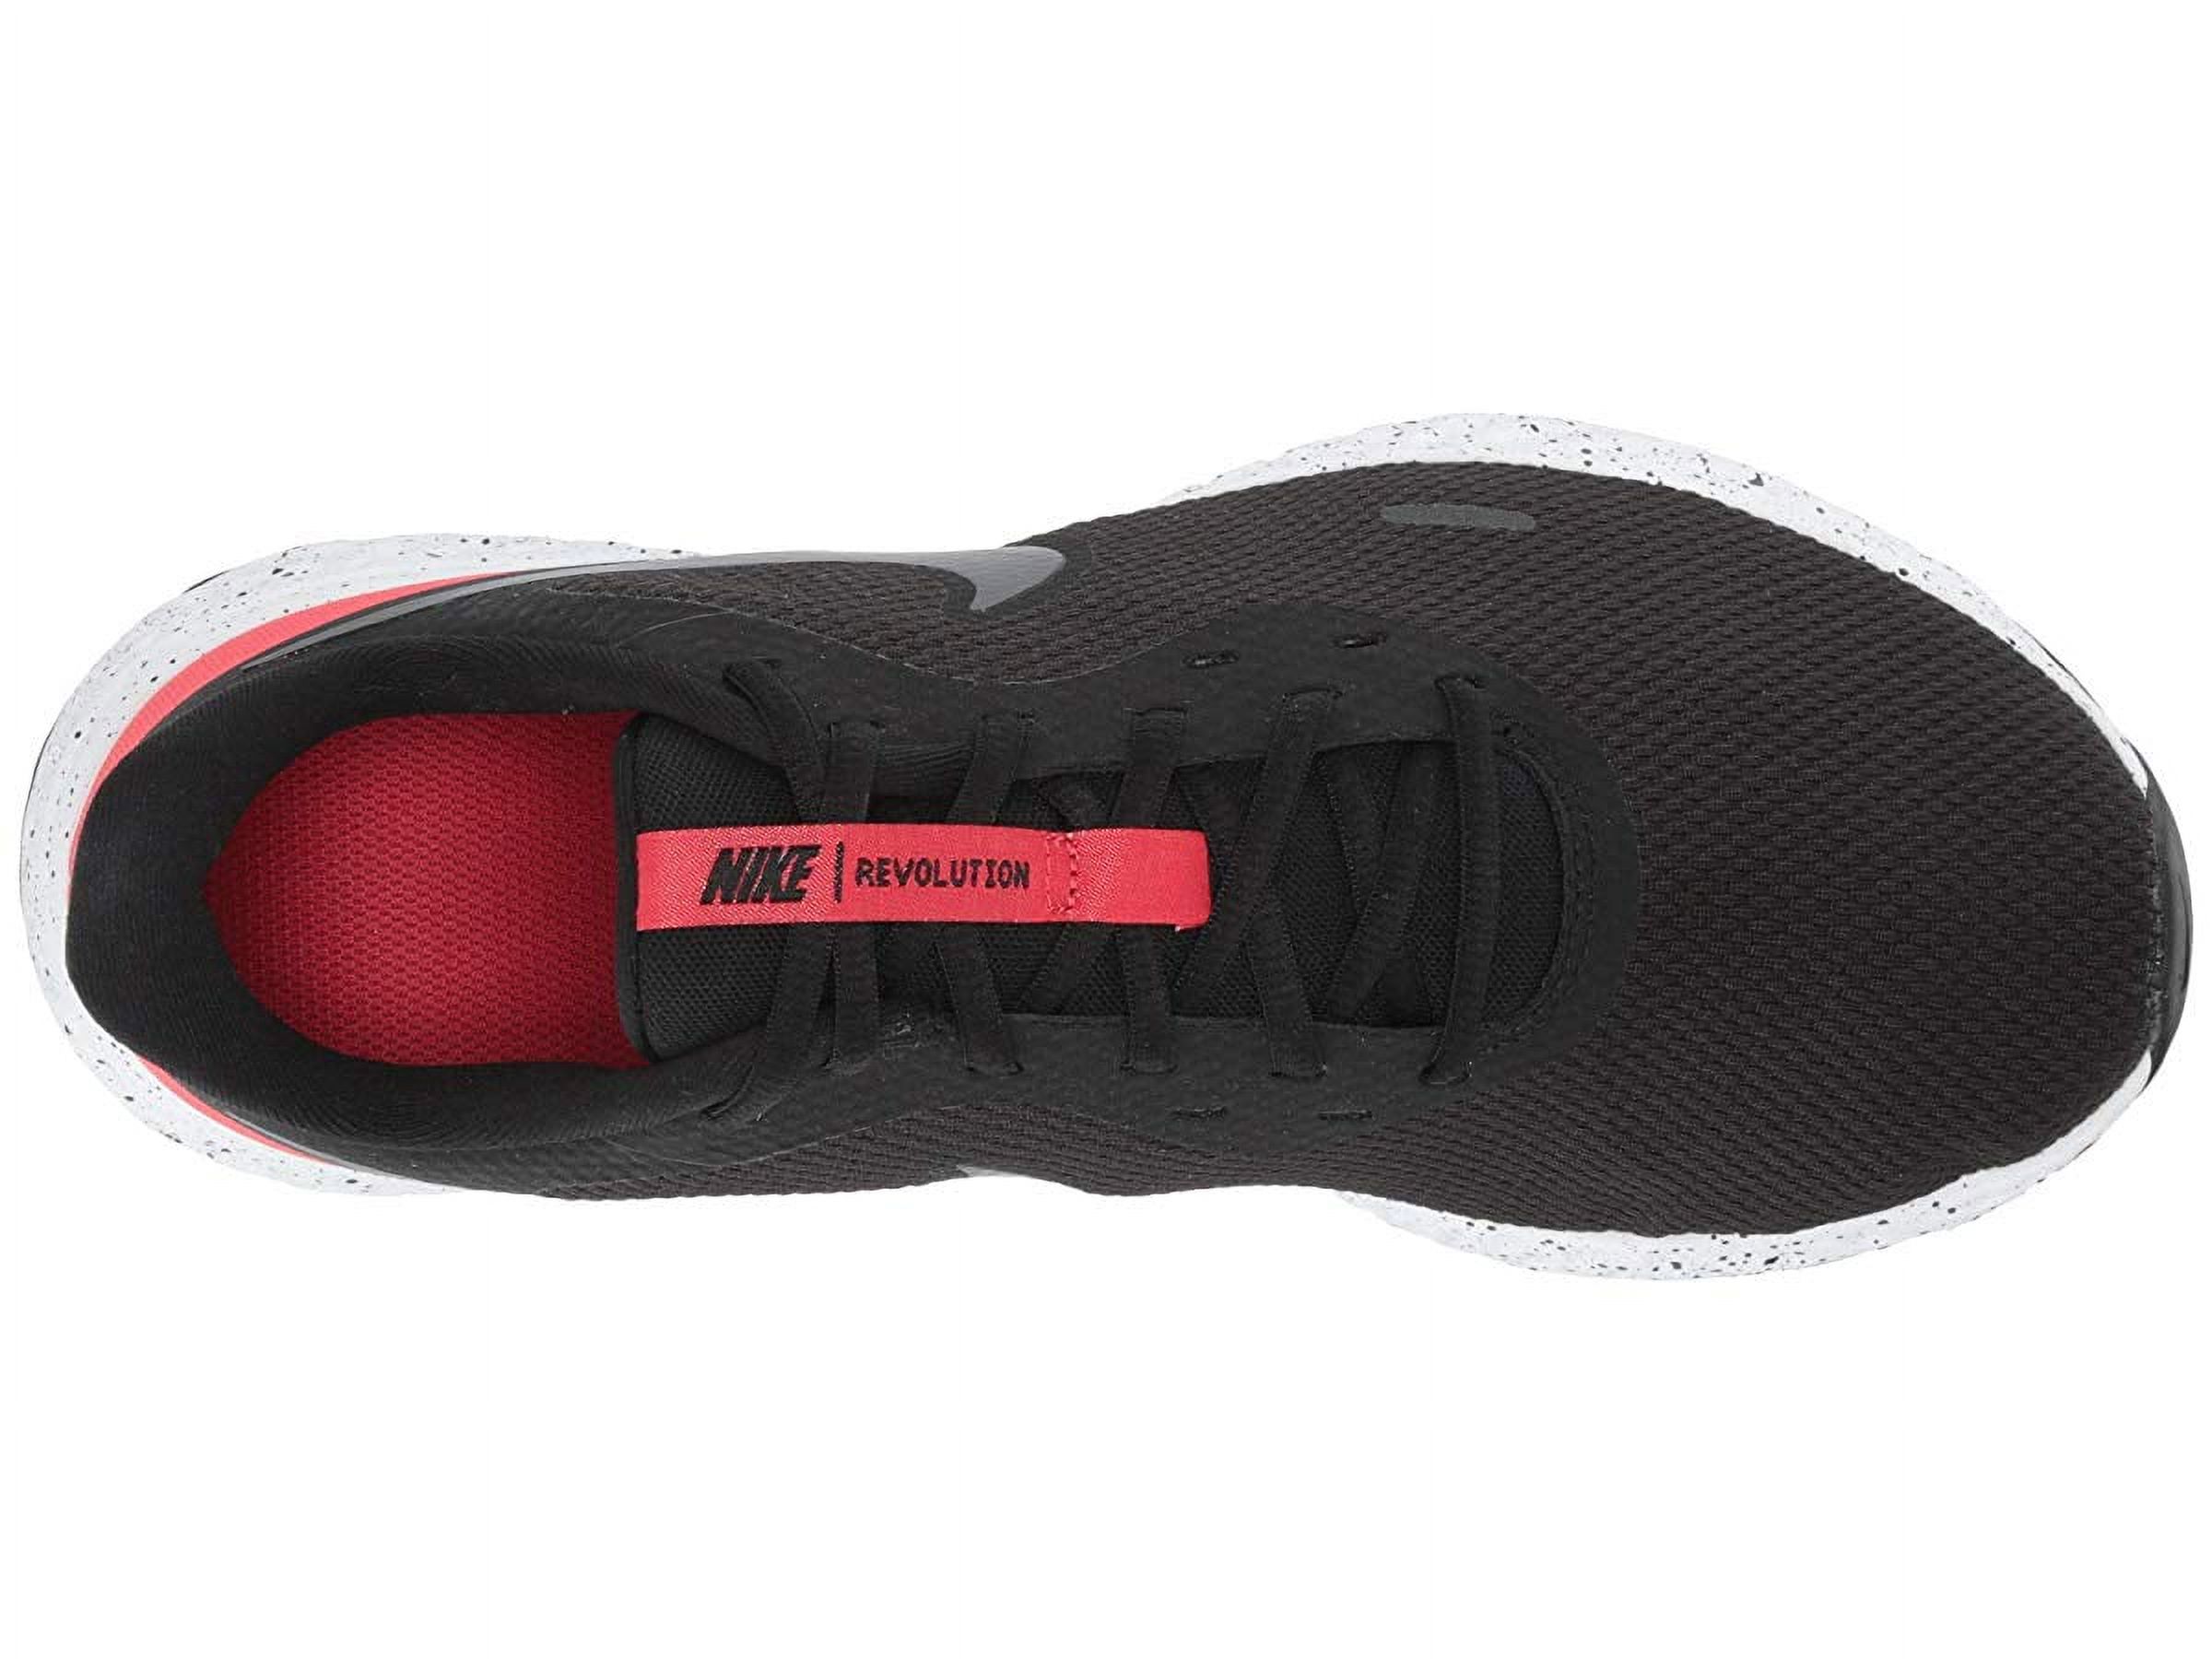 Nike Revolution 5 Black/Anthracite/University Red/White - image 4 of 6